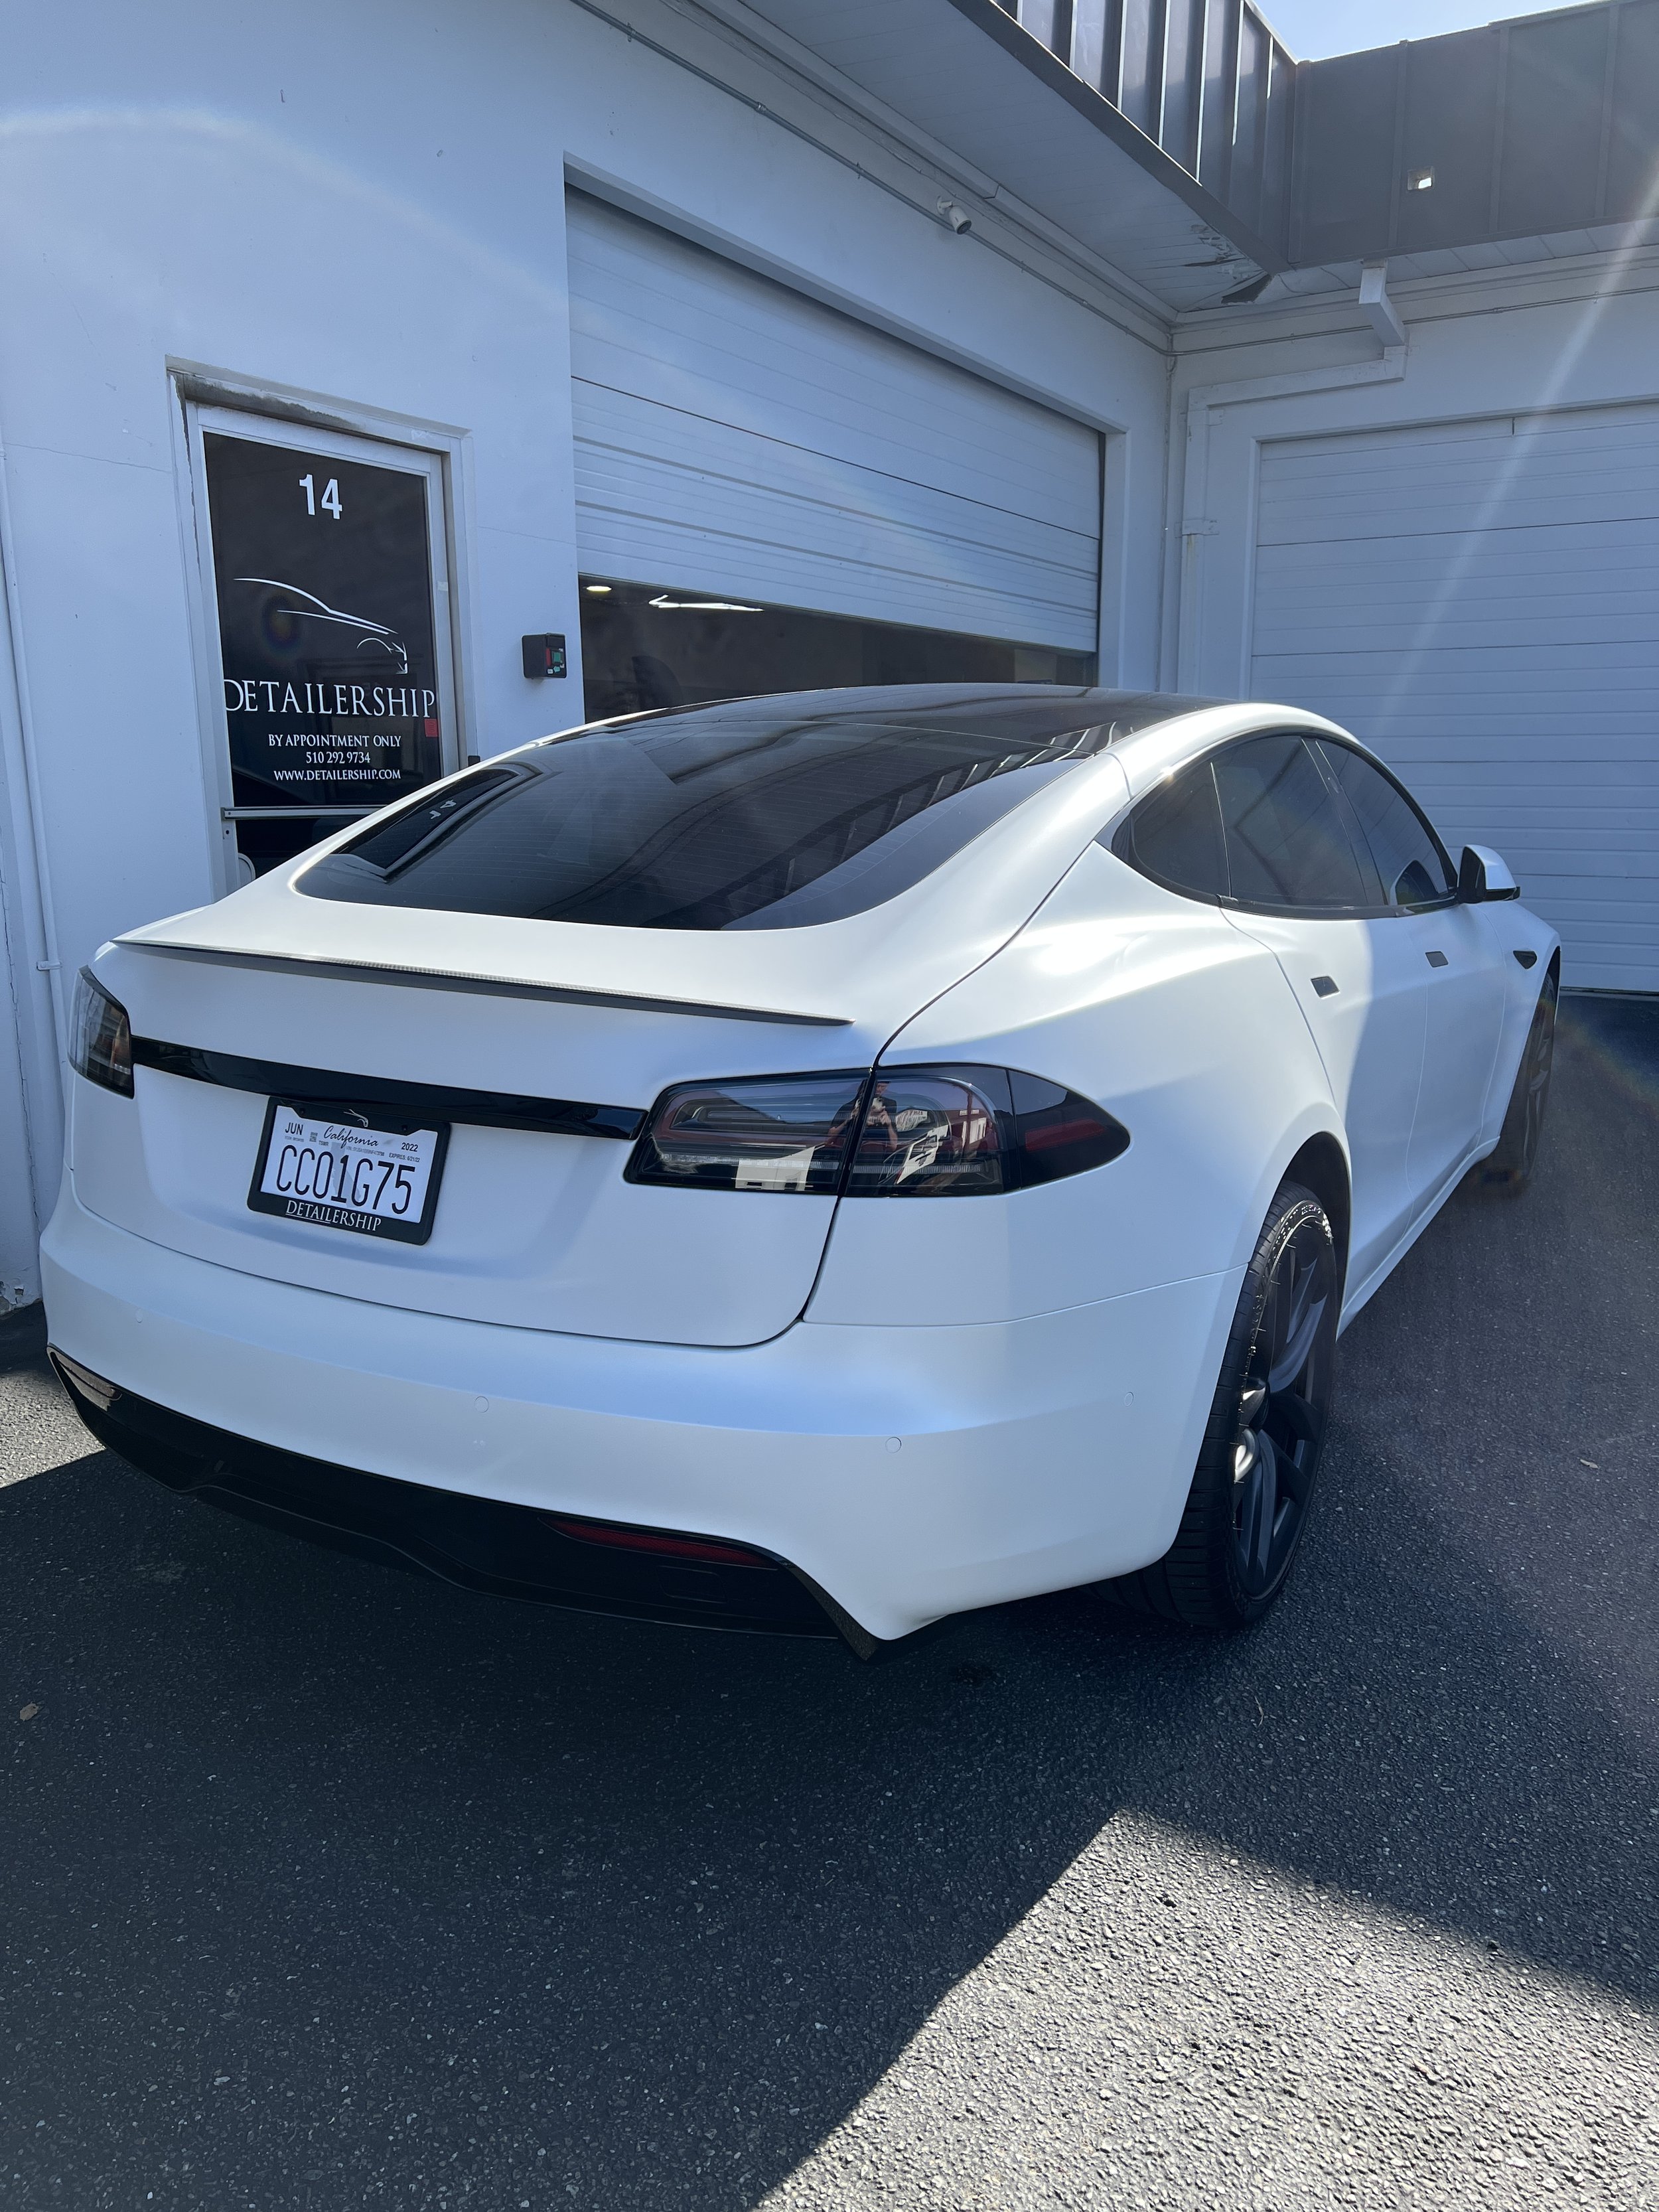 2022 Tesla Model S Plaid (Multicoat White) — Detailership™